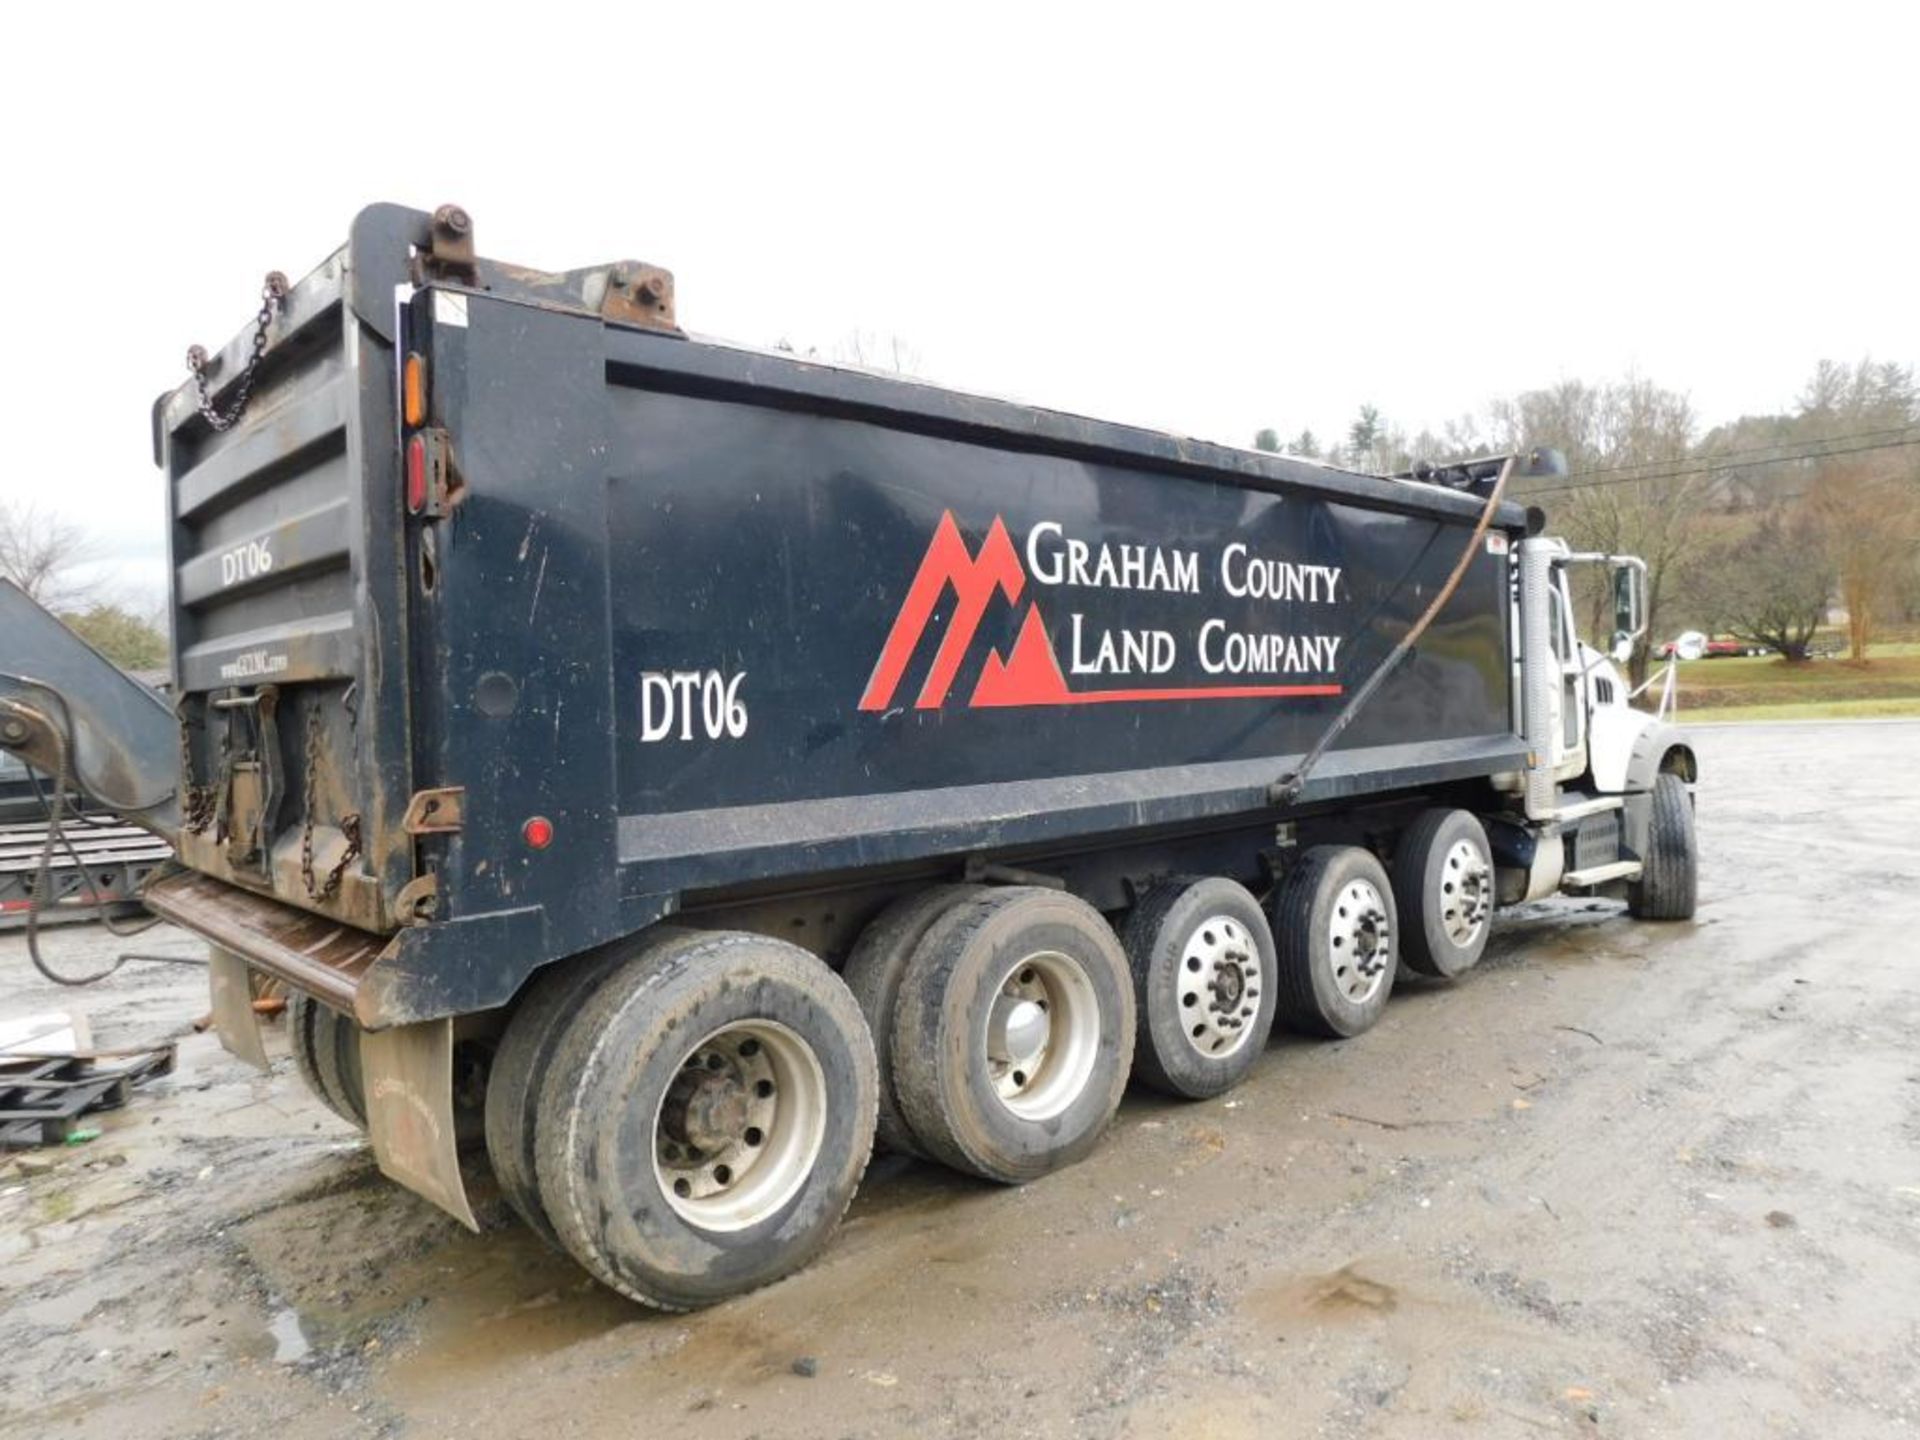 2017 Mack GV713 Quint-Axle Dump Truck, VIN 1M2AX07C7HMO33546, 289,436 Miles Indicated, DT06 - Image 5 of 9